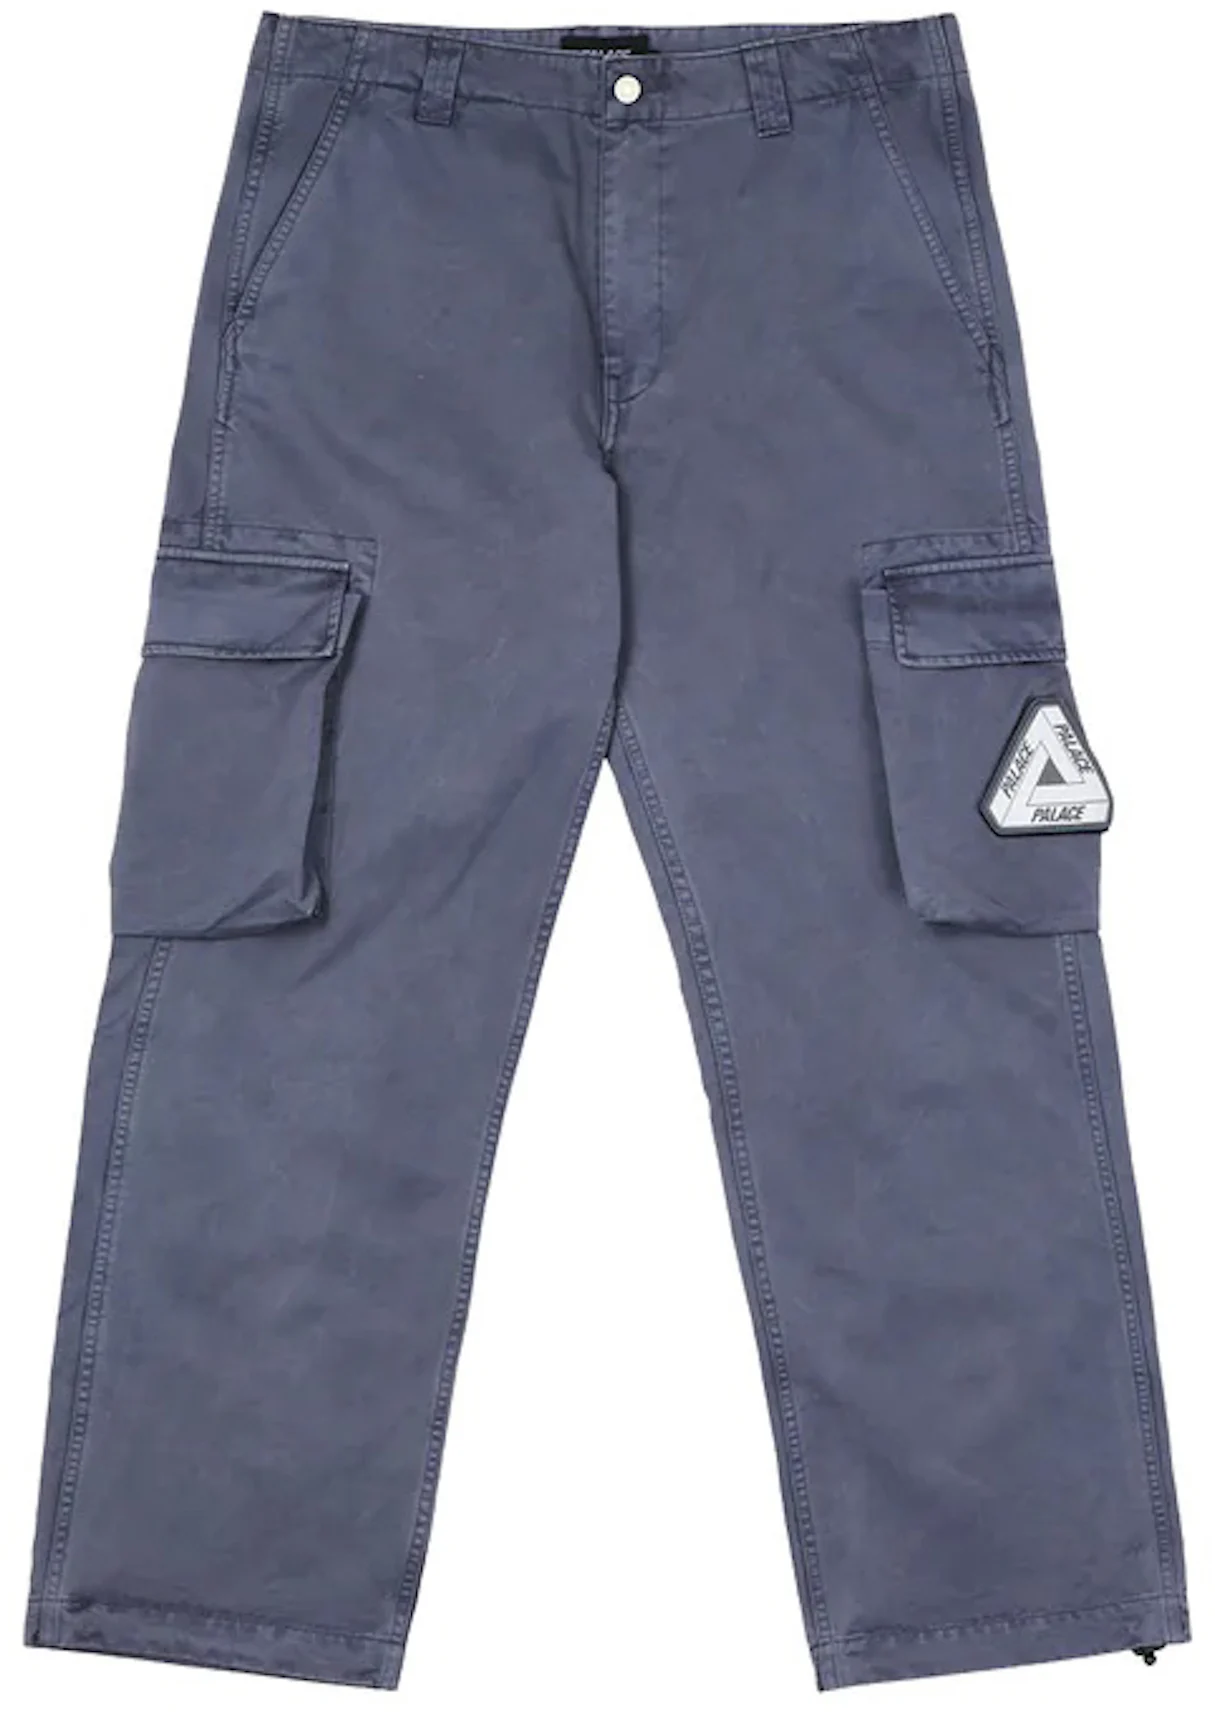 Grey Baleaf Trousers: Shop at £9.98+